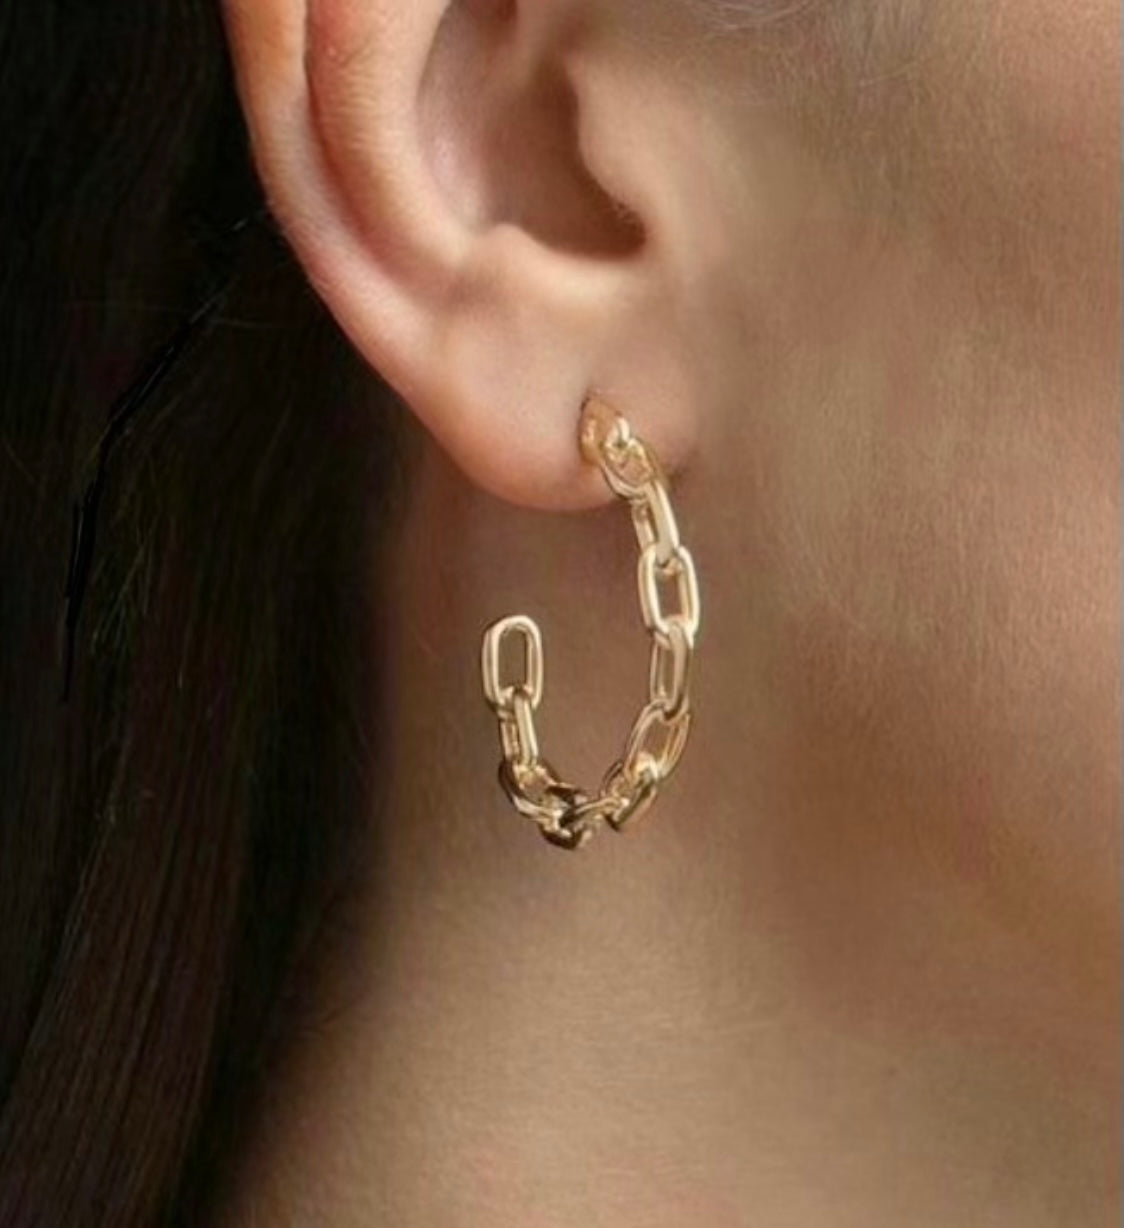 Reims Earrings